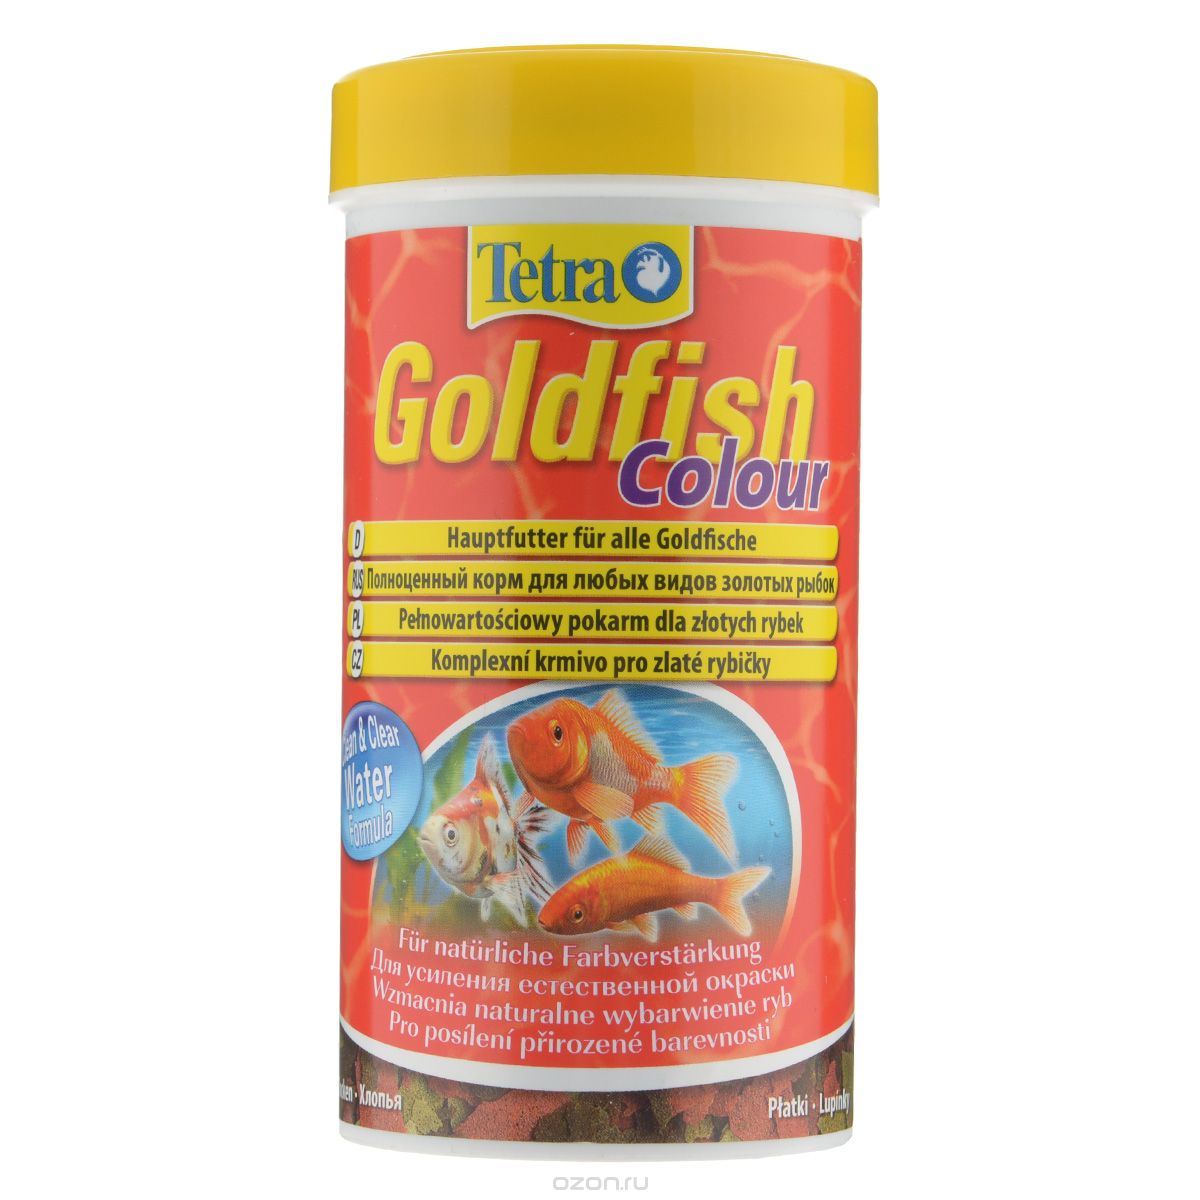  Tetra Goldfish 